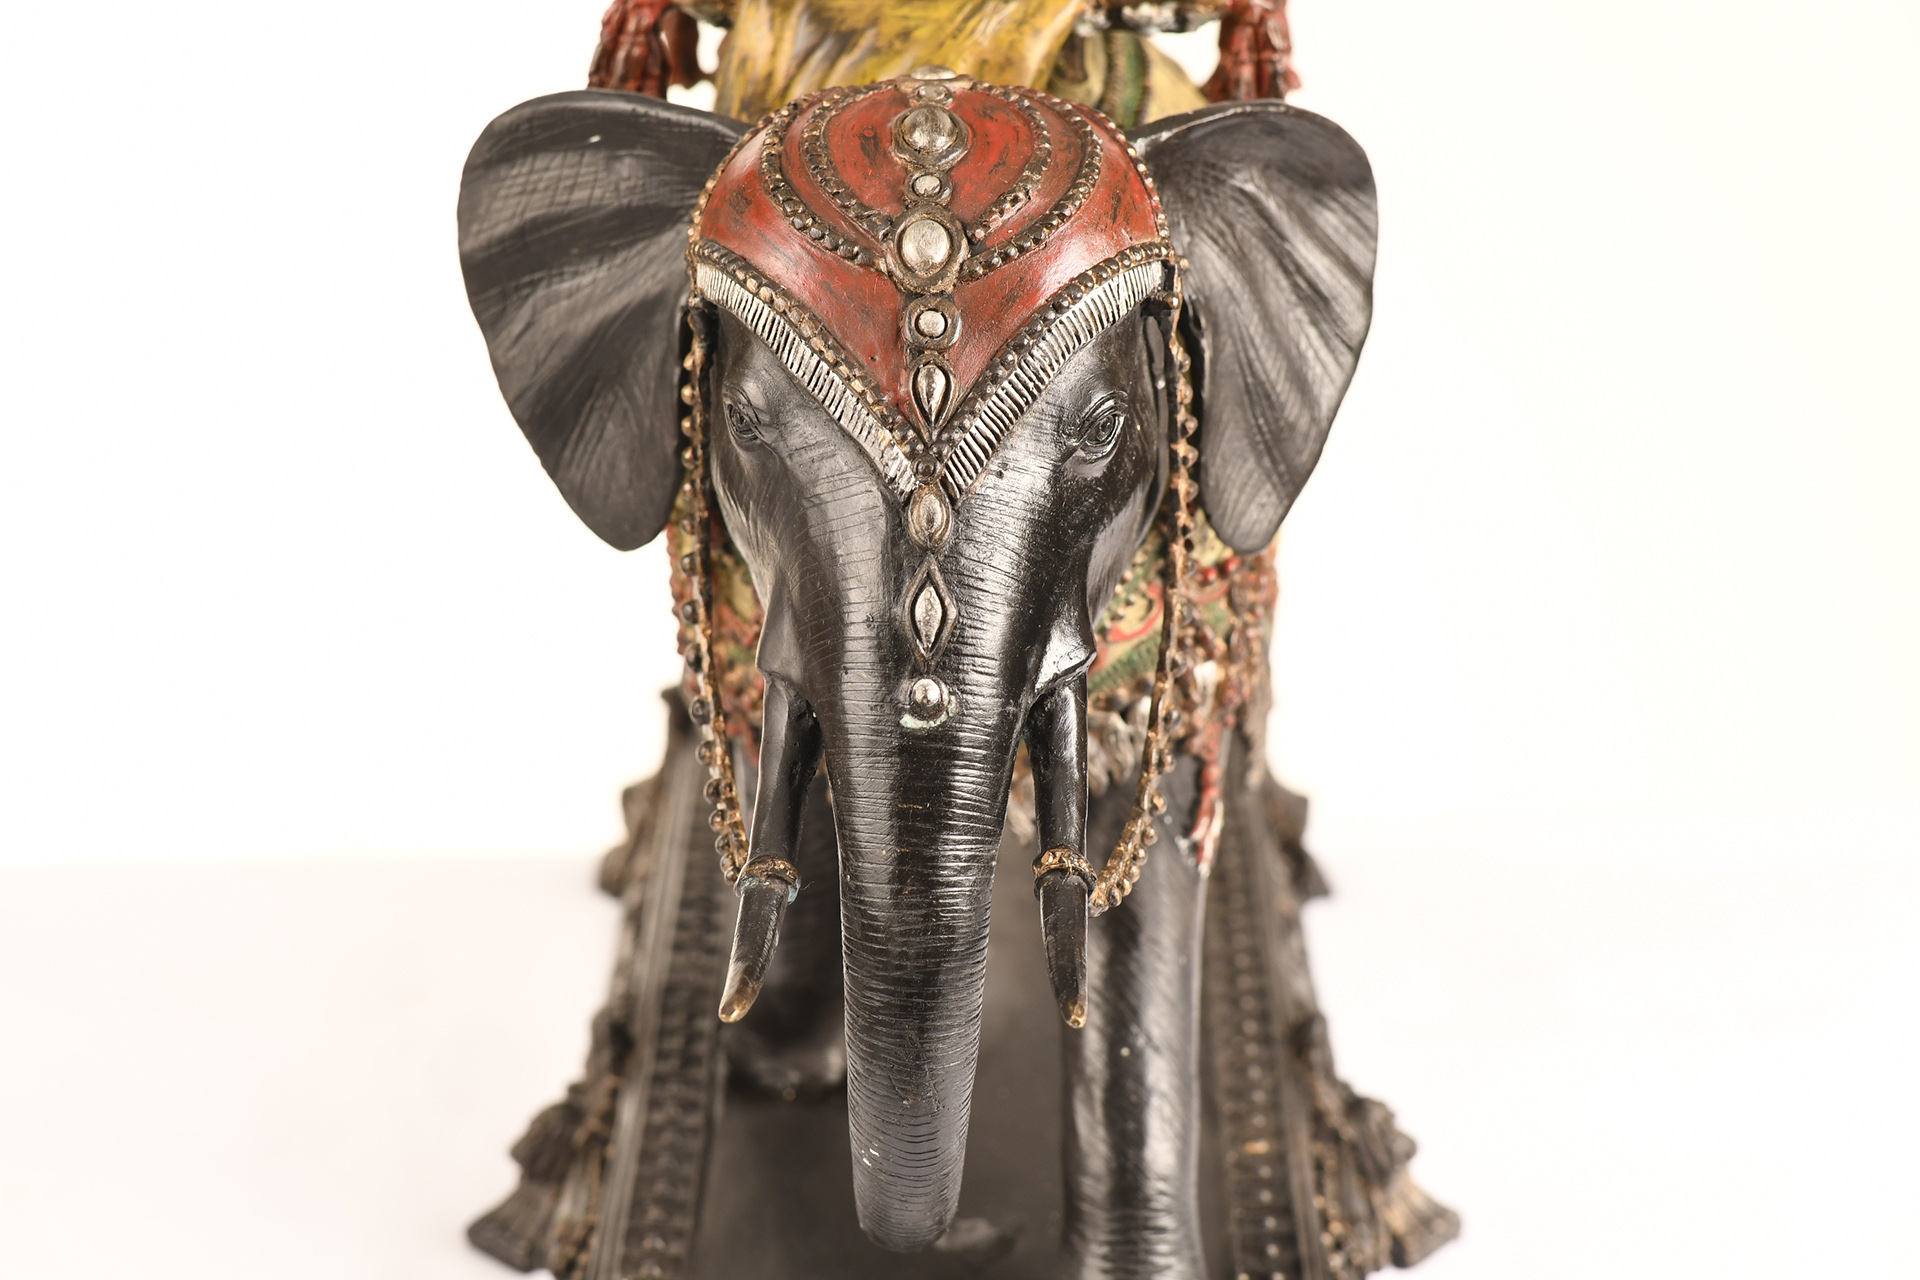 Elephant cast in Bronze/Brass